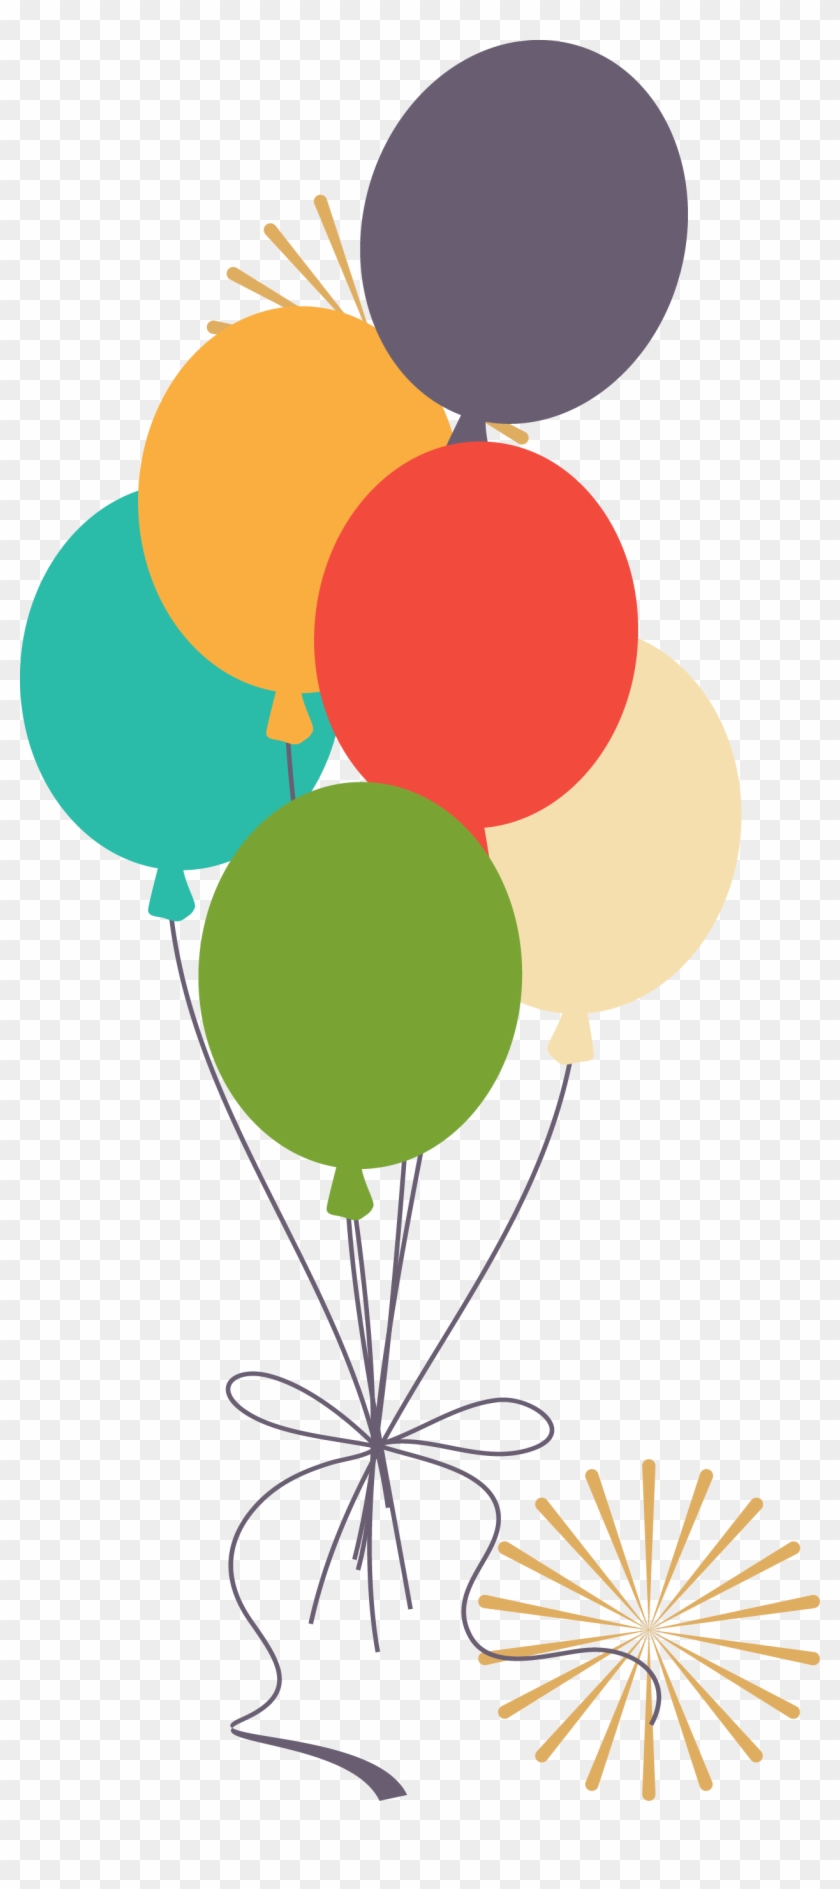 Colored Balloons Vector Illustration - Balloon Illustration Vector #276023